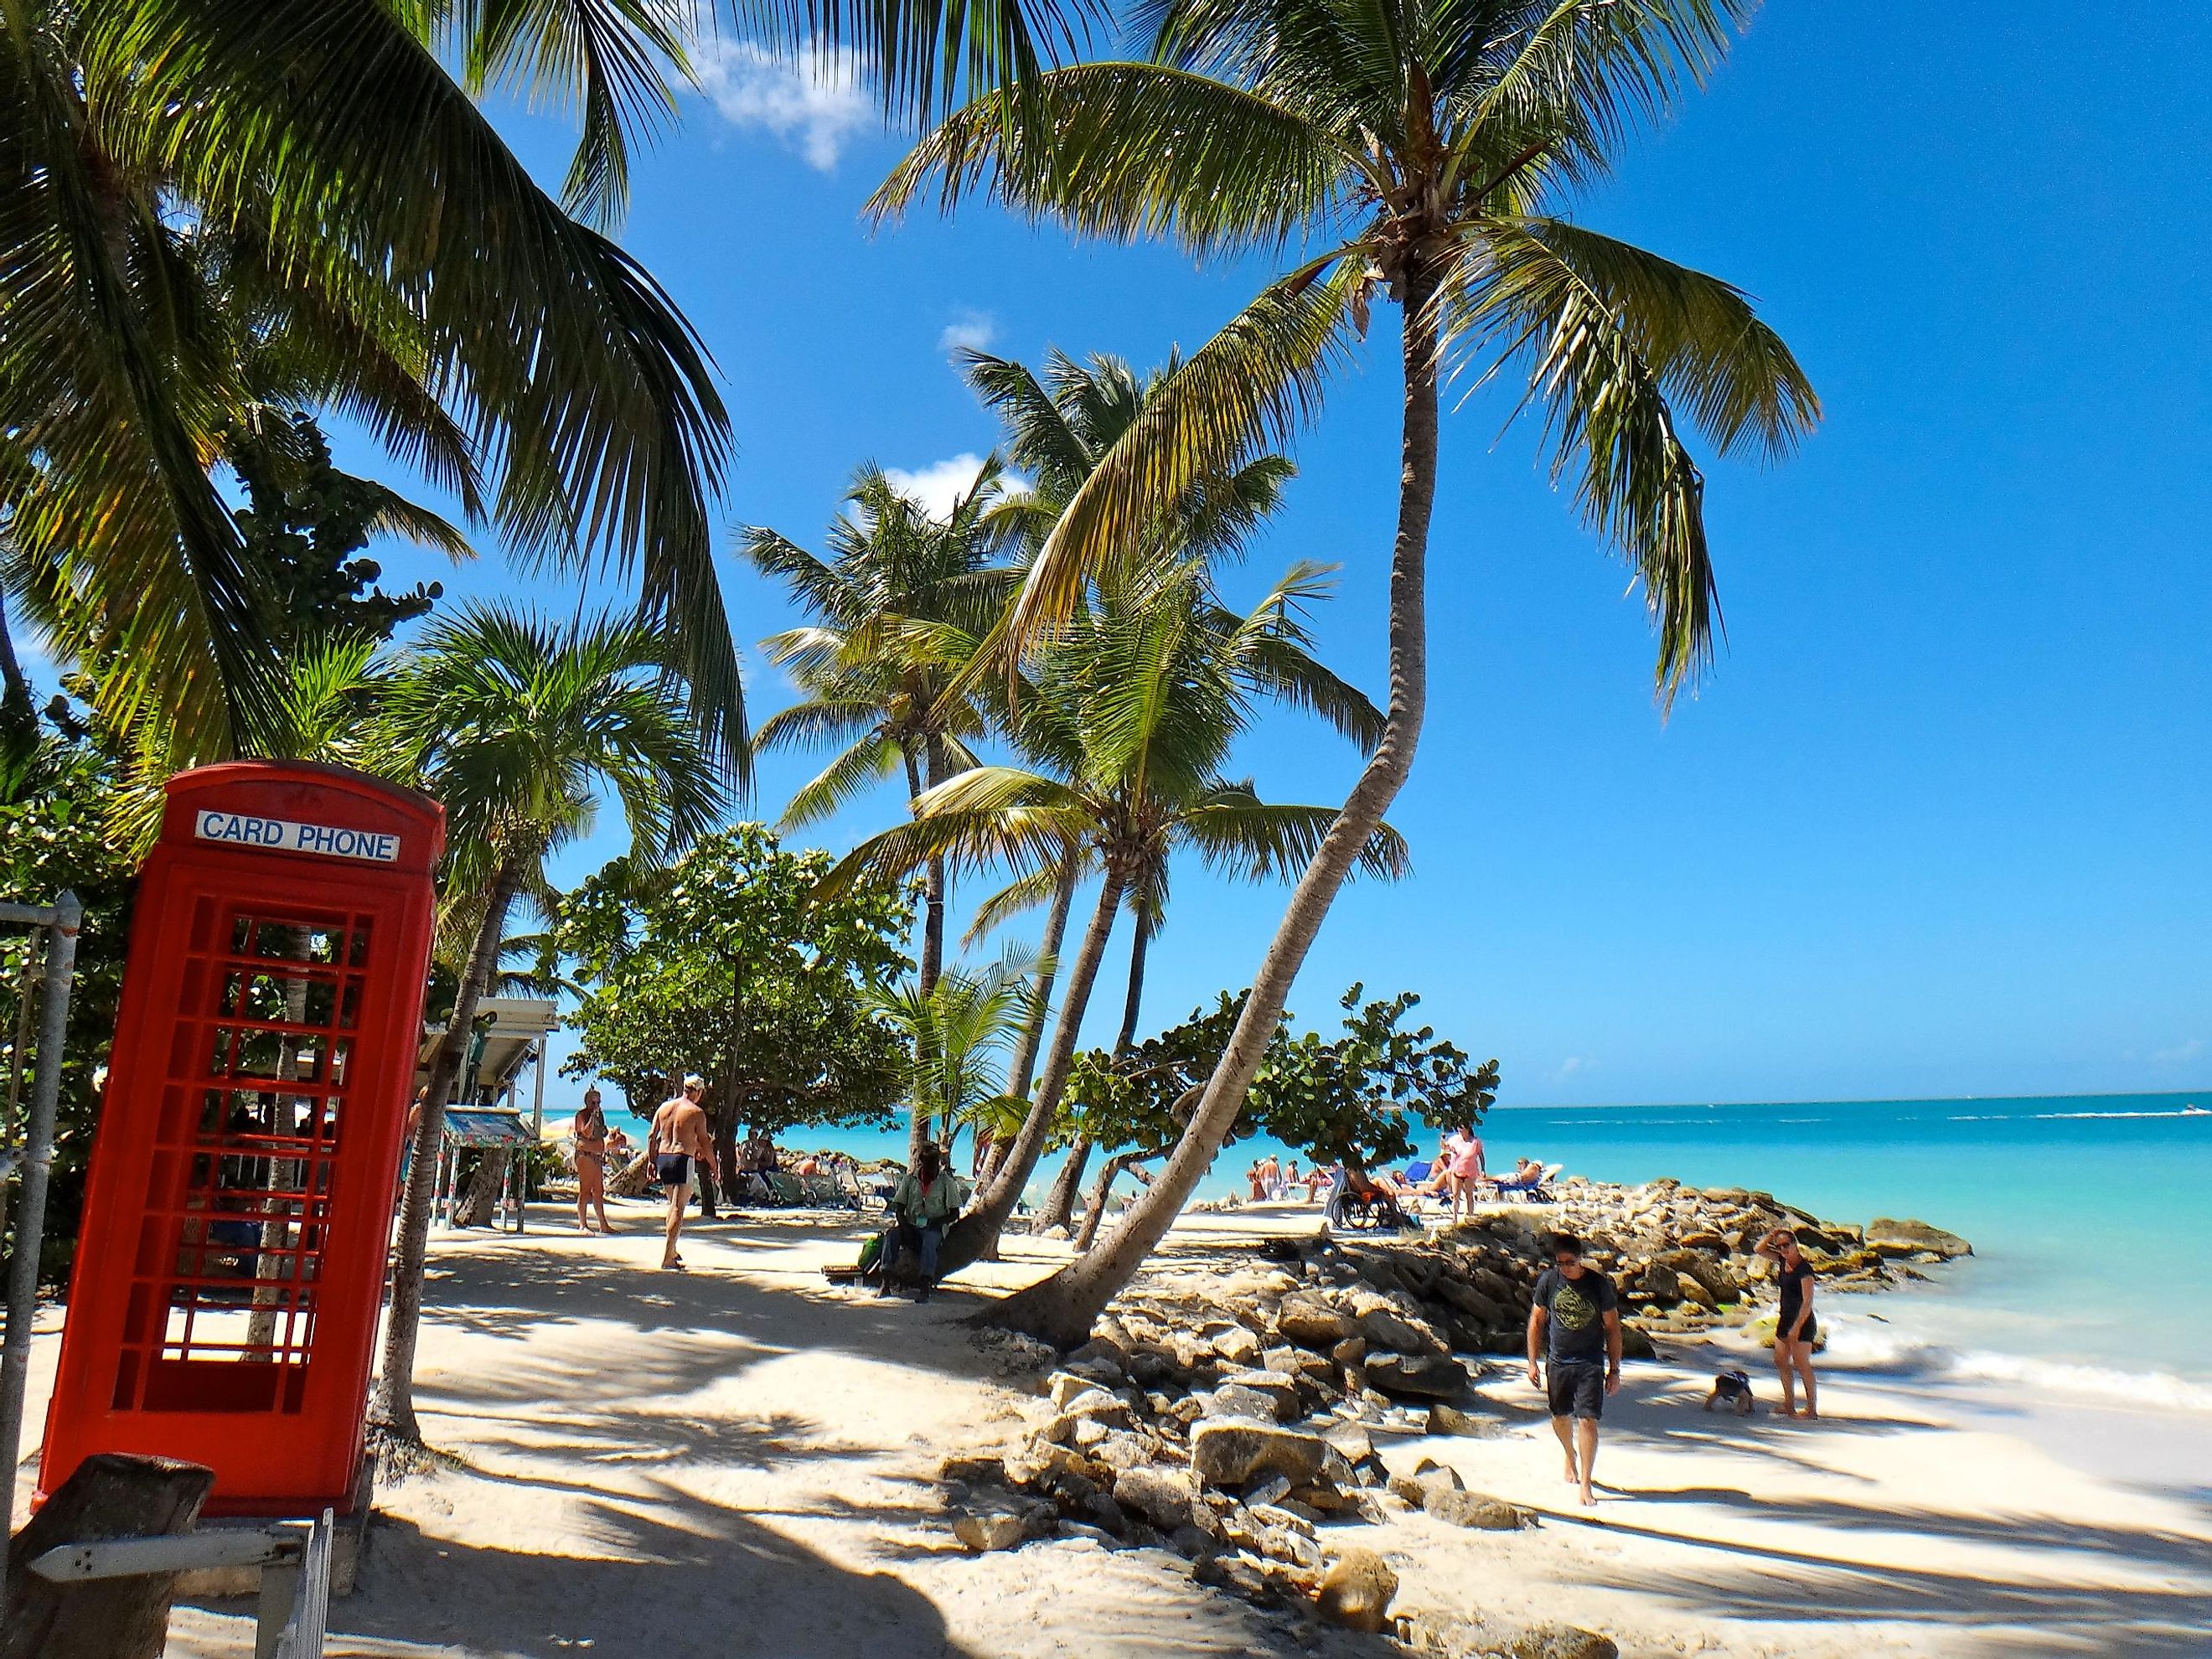 British phone booth on the beach at St. John's, Antigua and Barbuda.